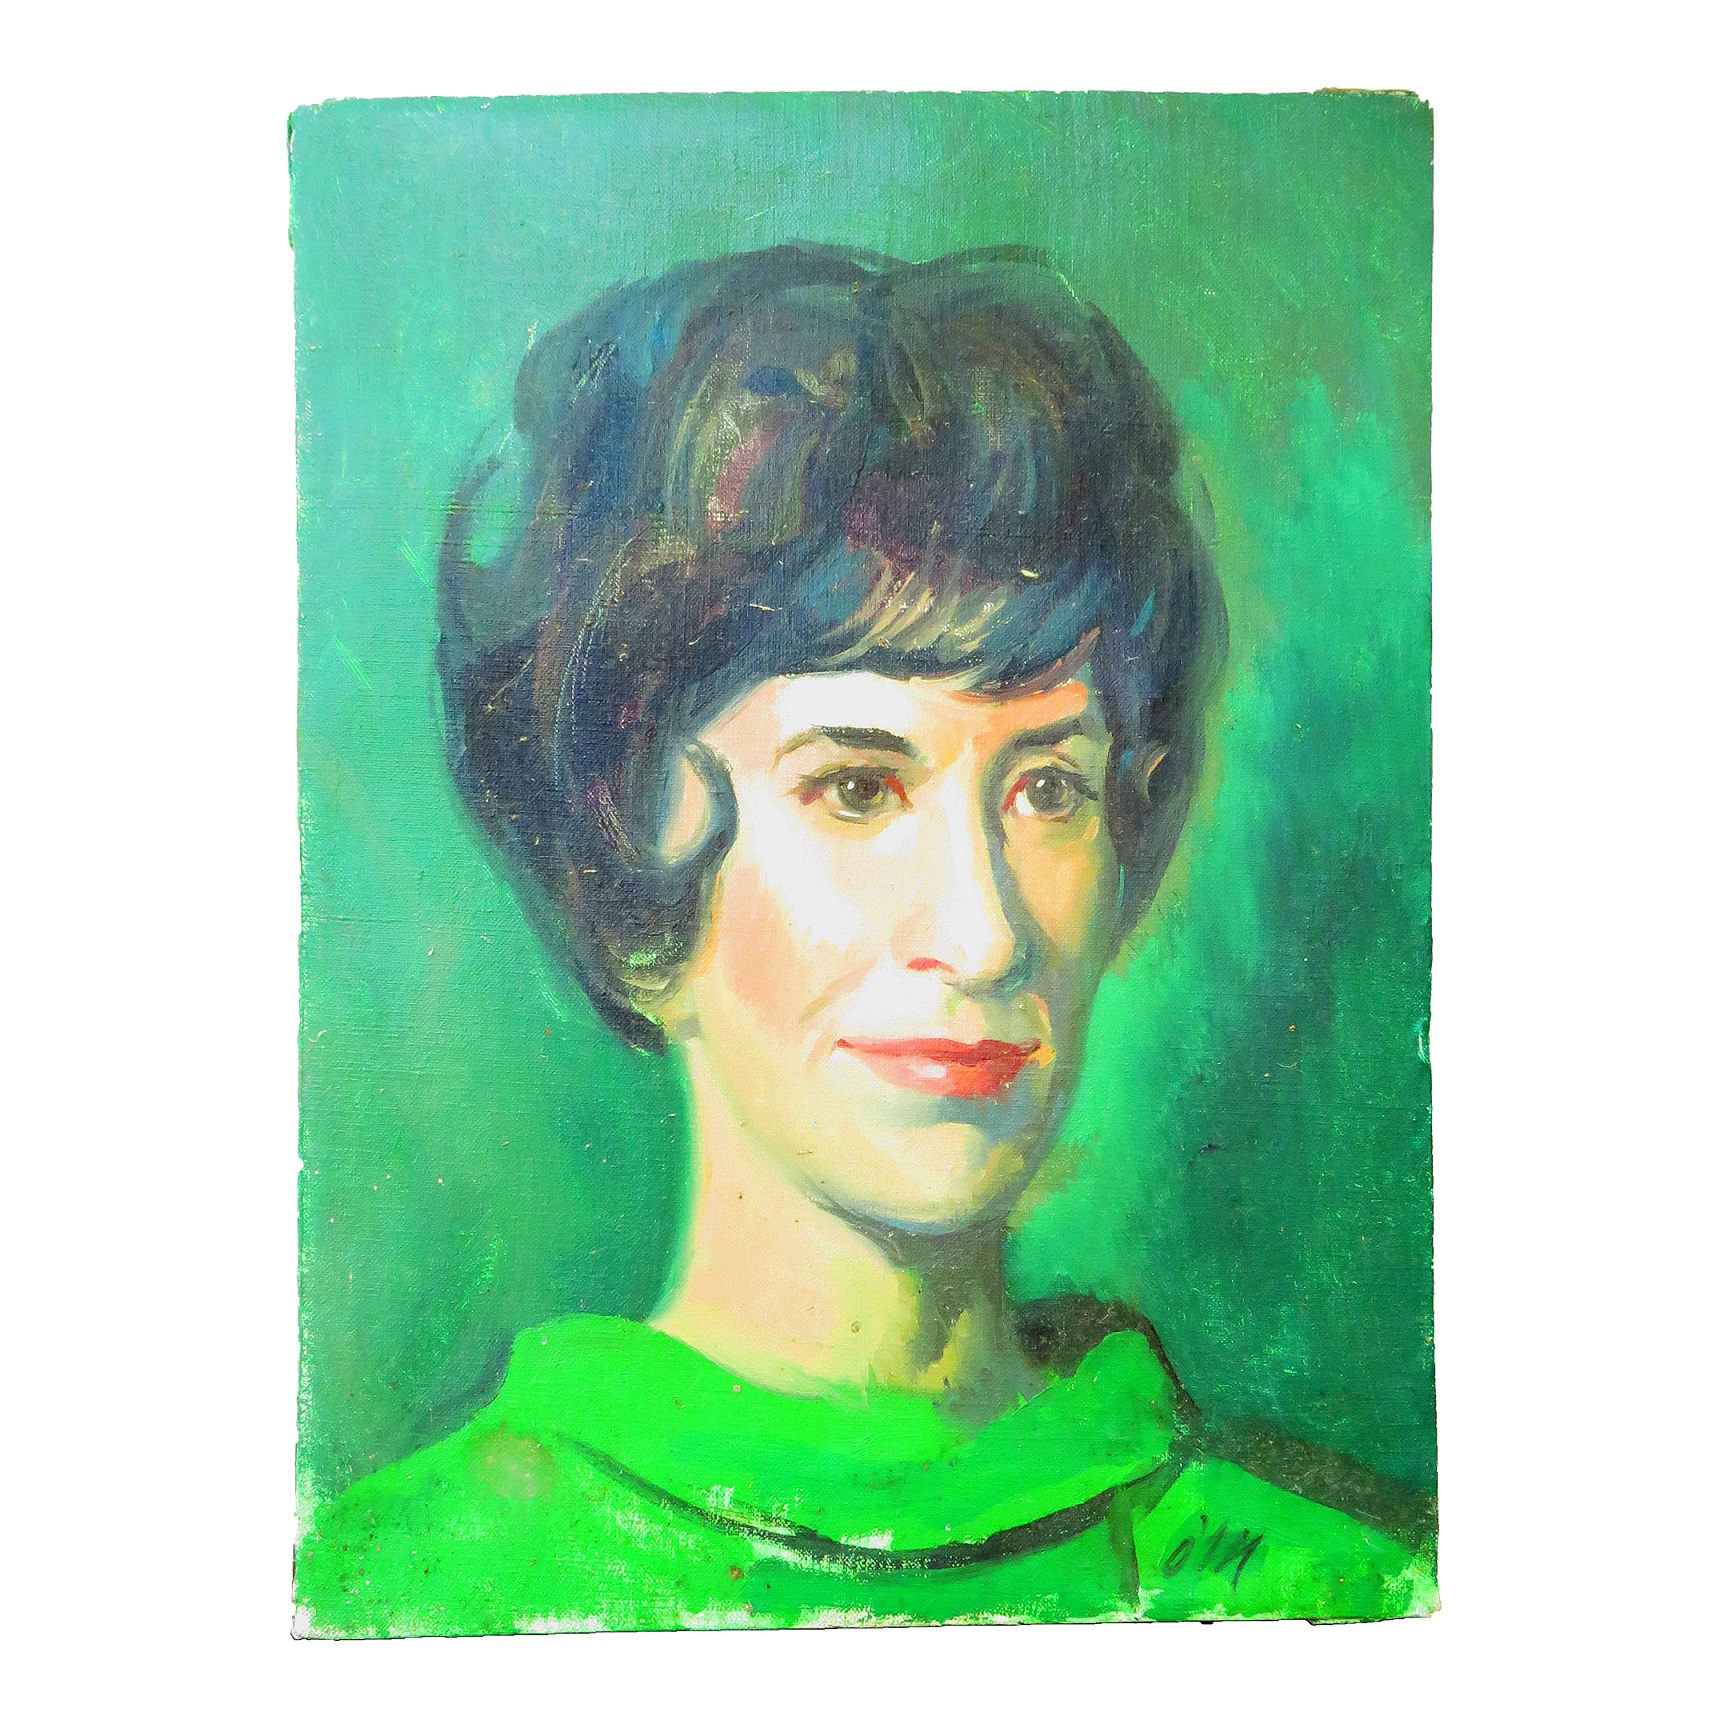 1960s Female Portrait - a Study in Green~P77665795